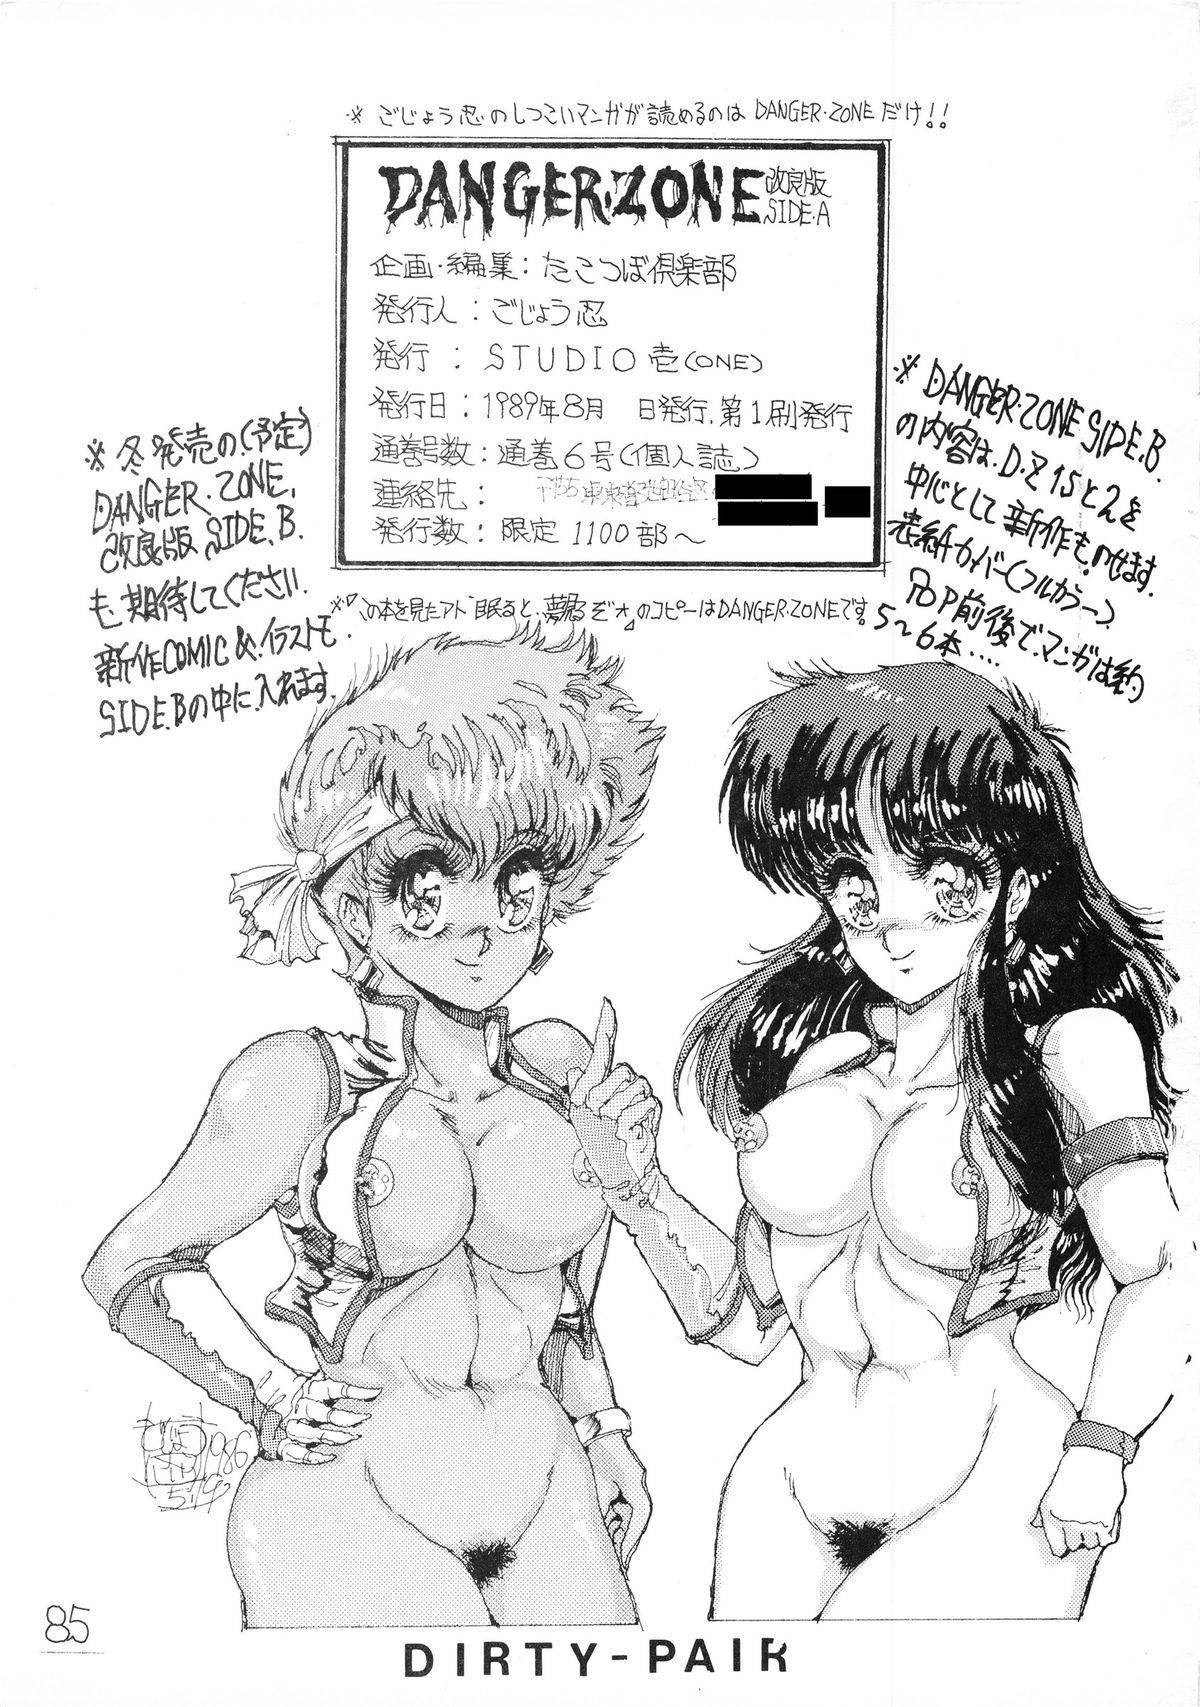 Lesbians DANGER ZONE improved version SIDE A - Dirty pair Maison ikkoku Magical emi Kimagure orange road Gayfuck - Page 87